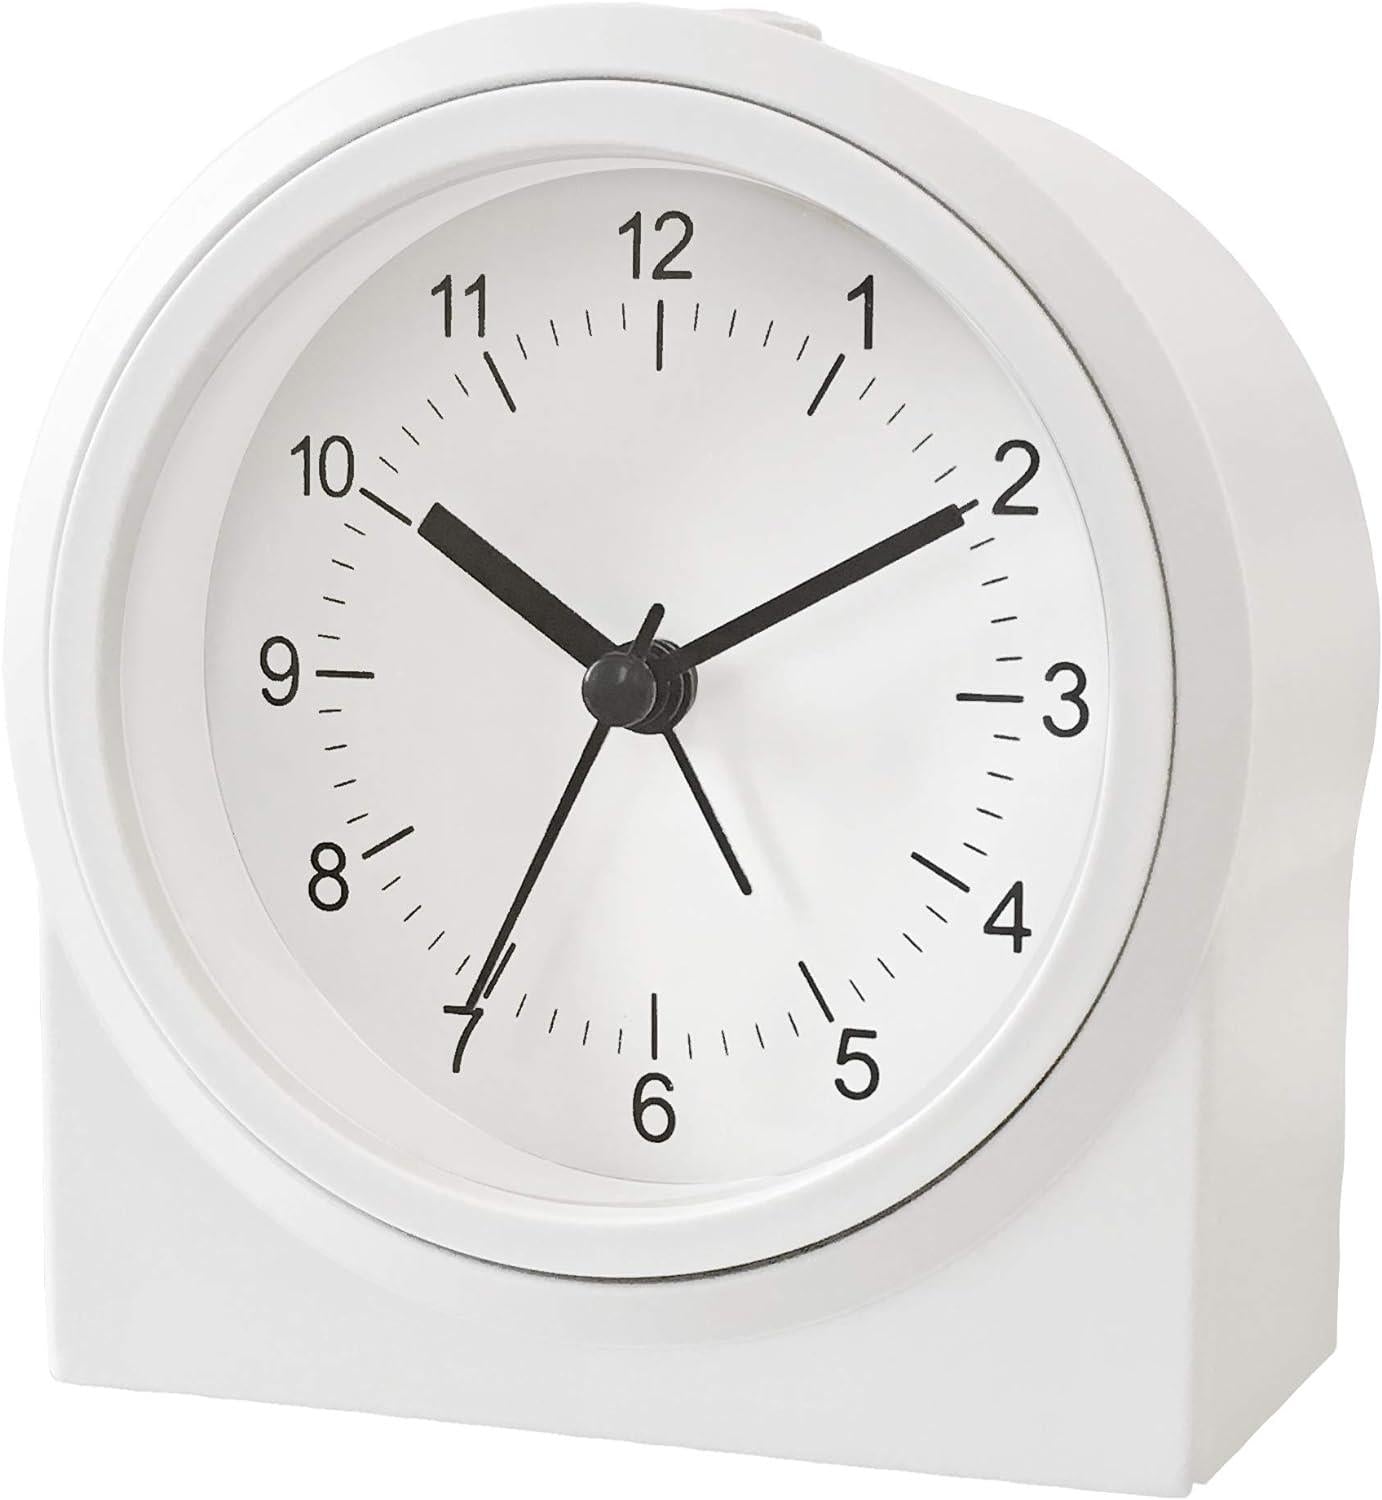 Acctim Archer Non-ticking Sweep Alarm Clock in White 16282